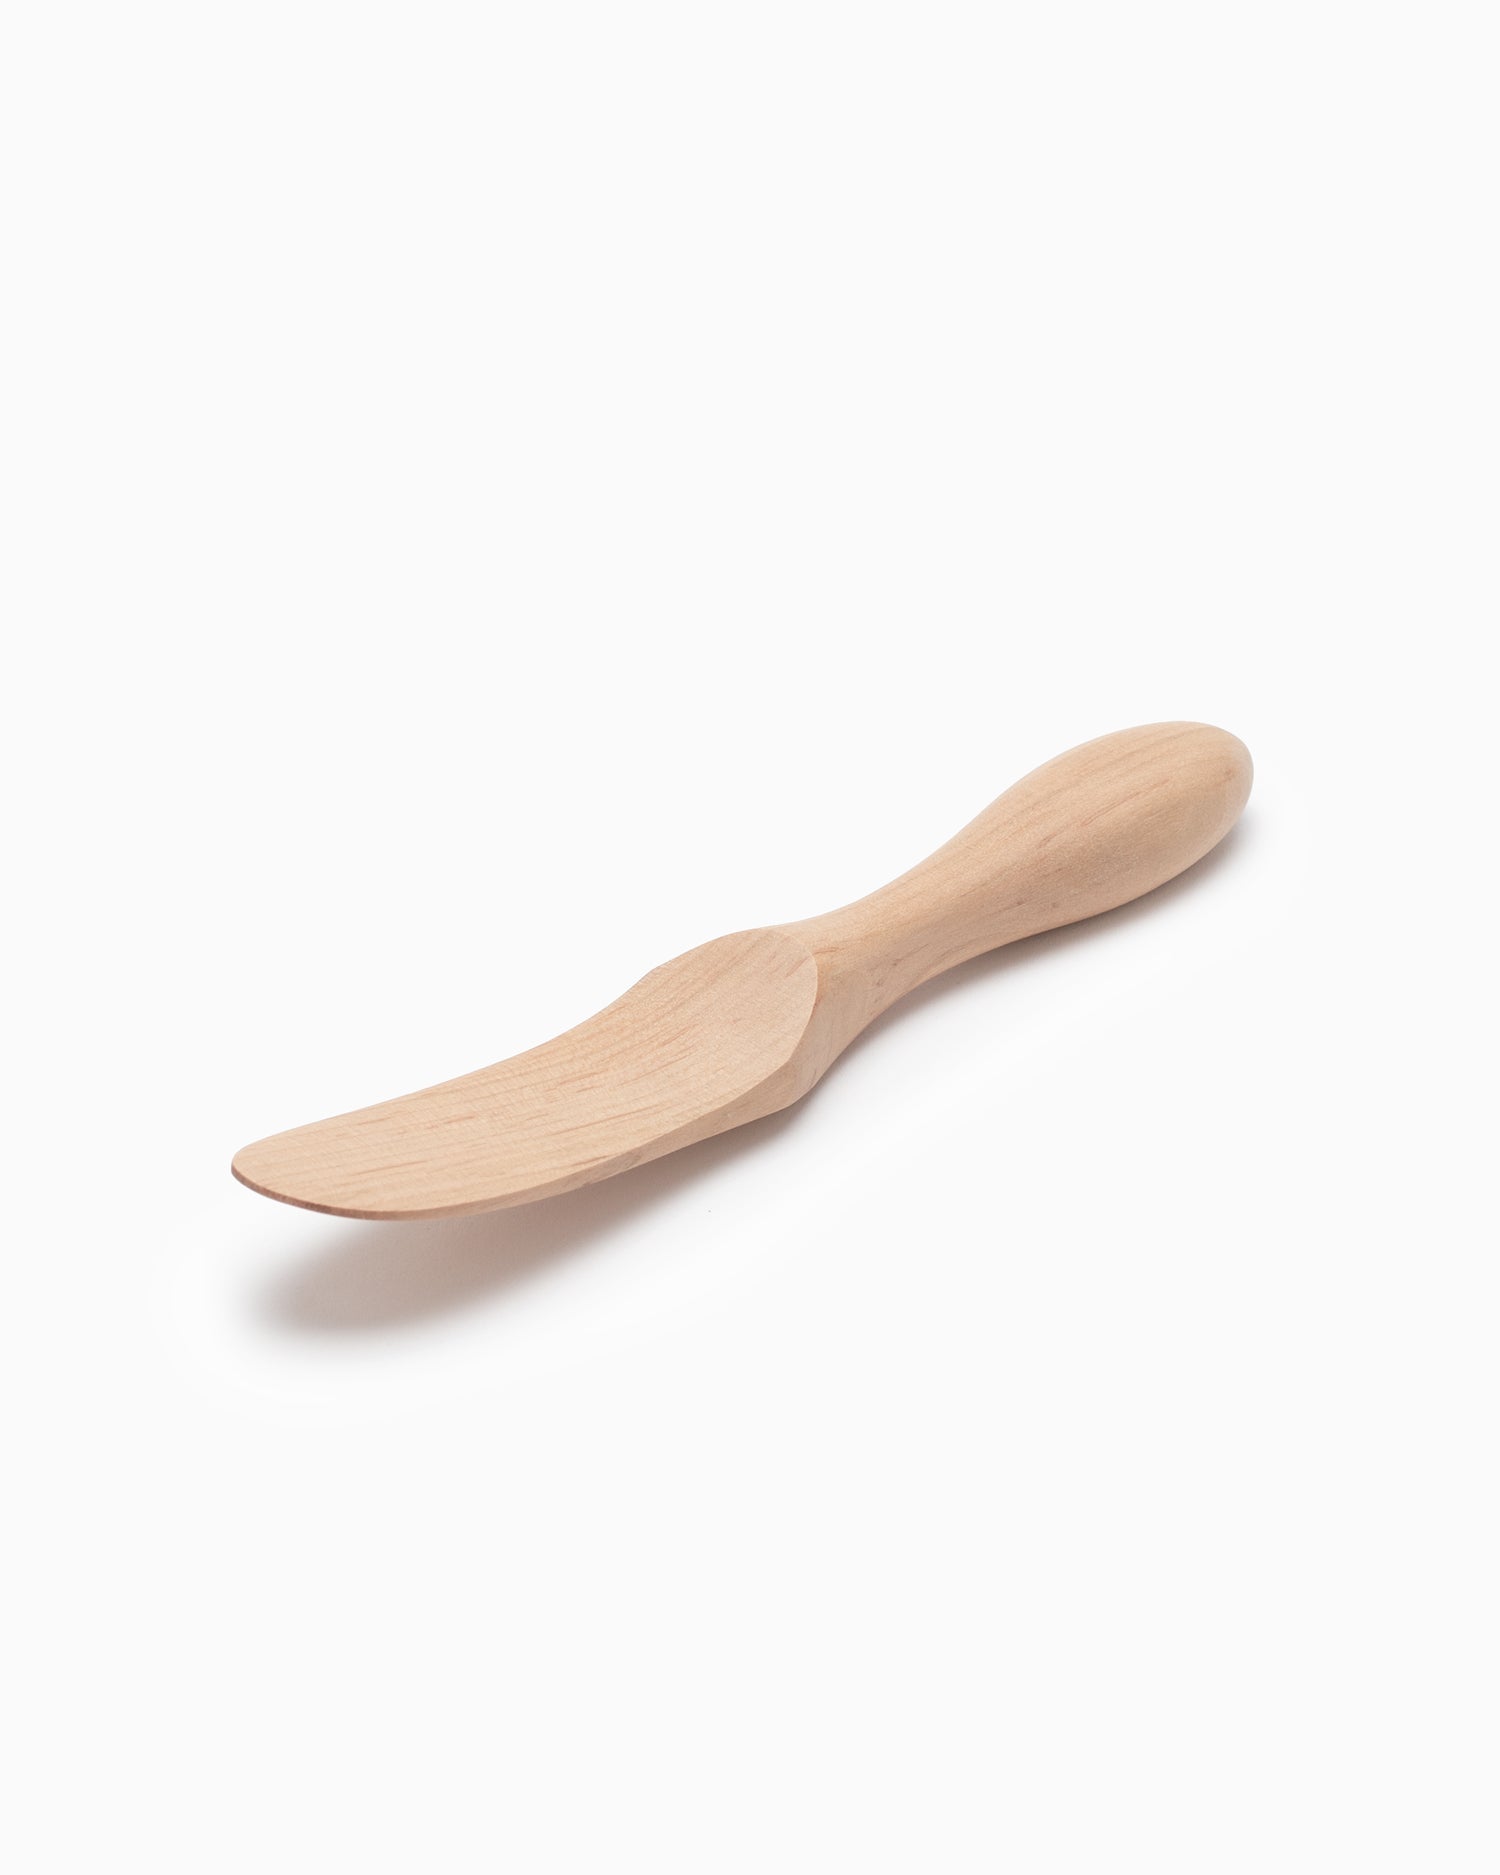 Japanese Wooden Butter Knife